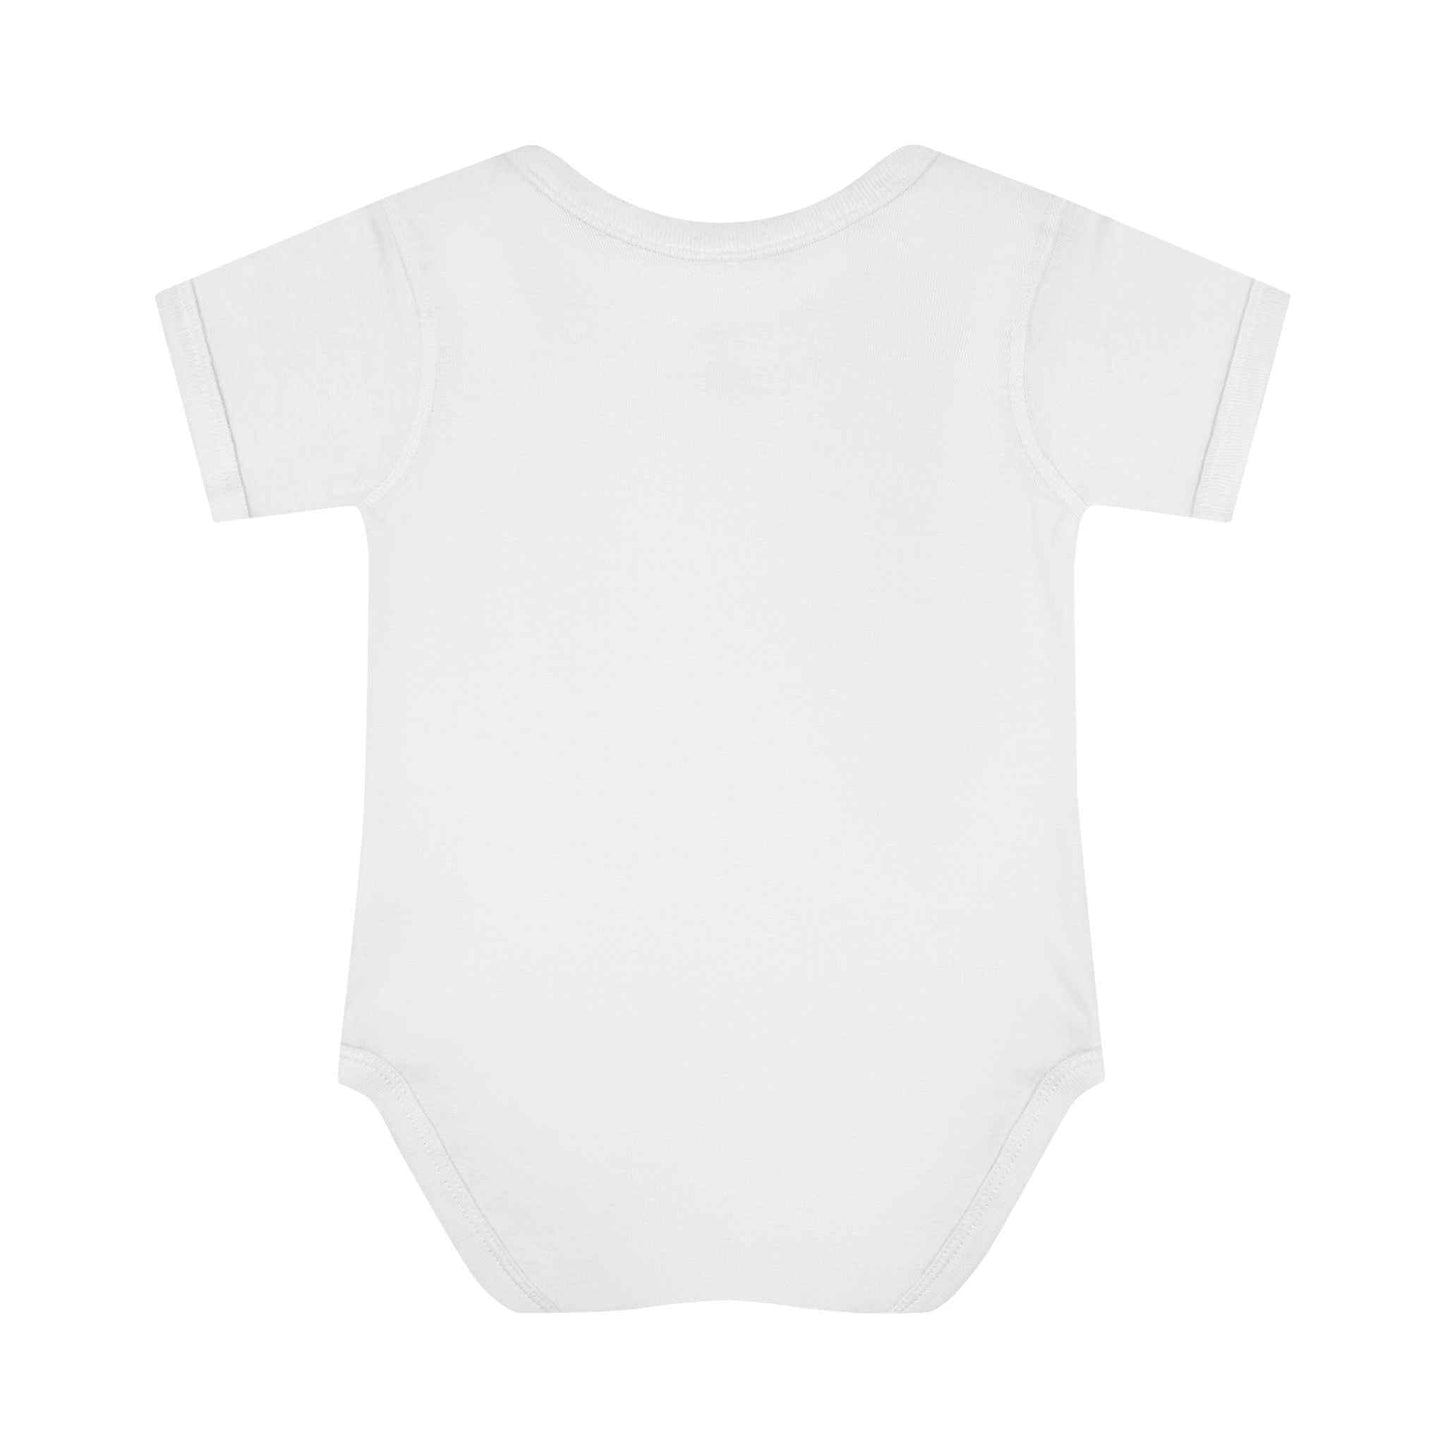 Crib Rules Infant Baby Bodysuit